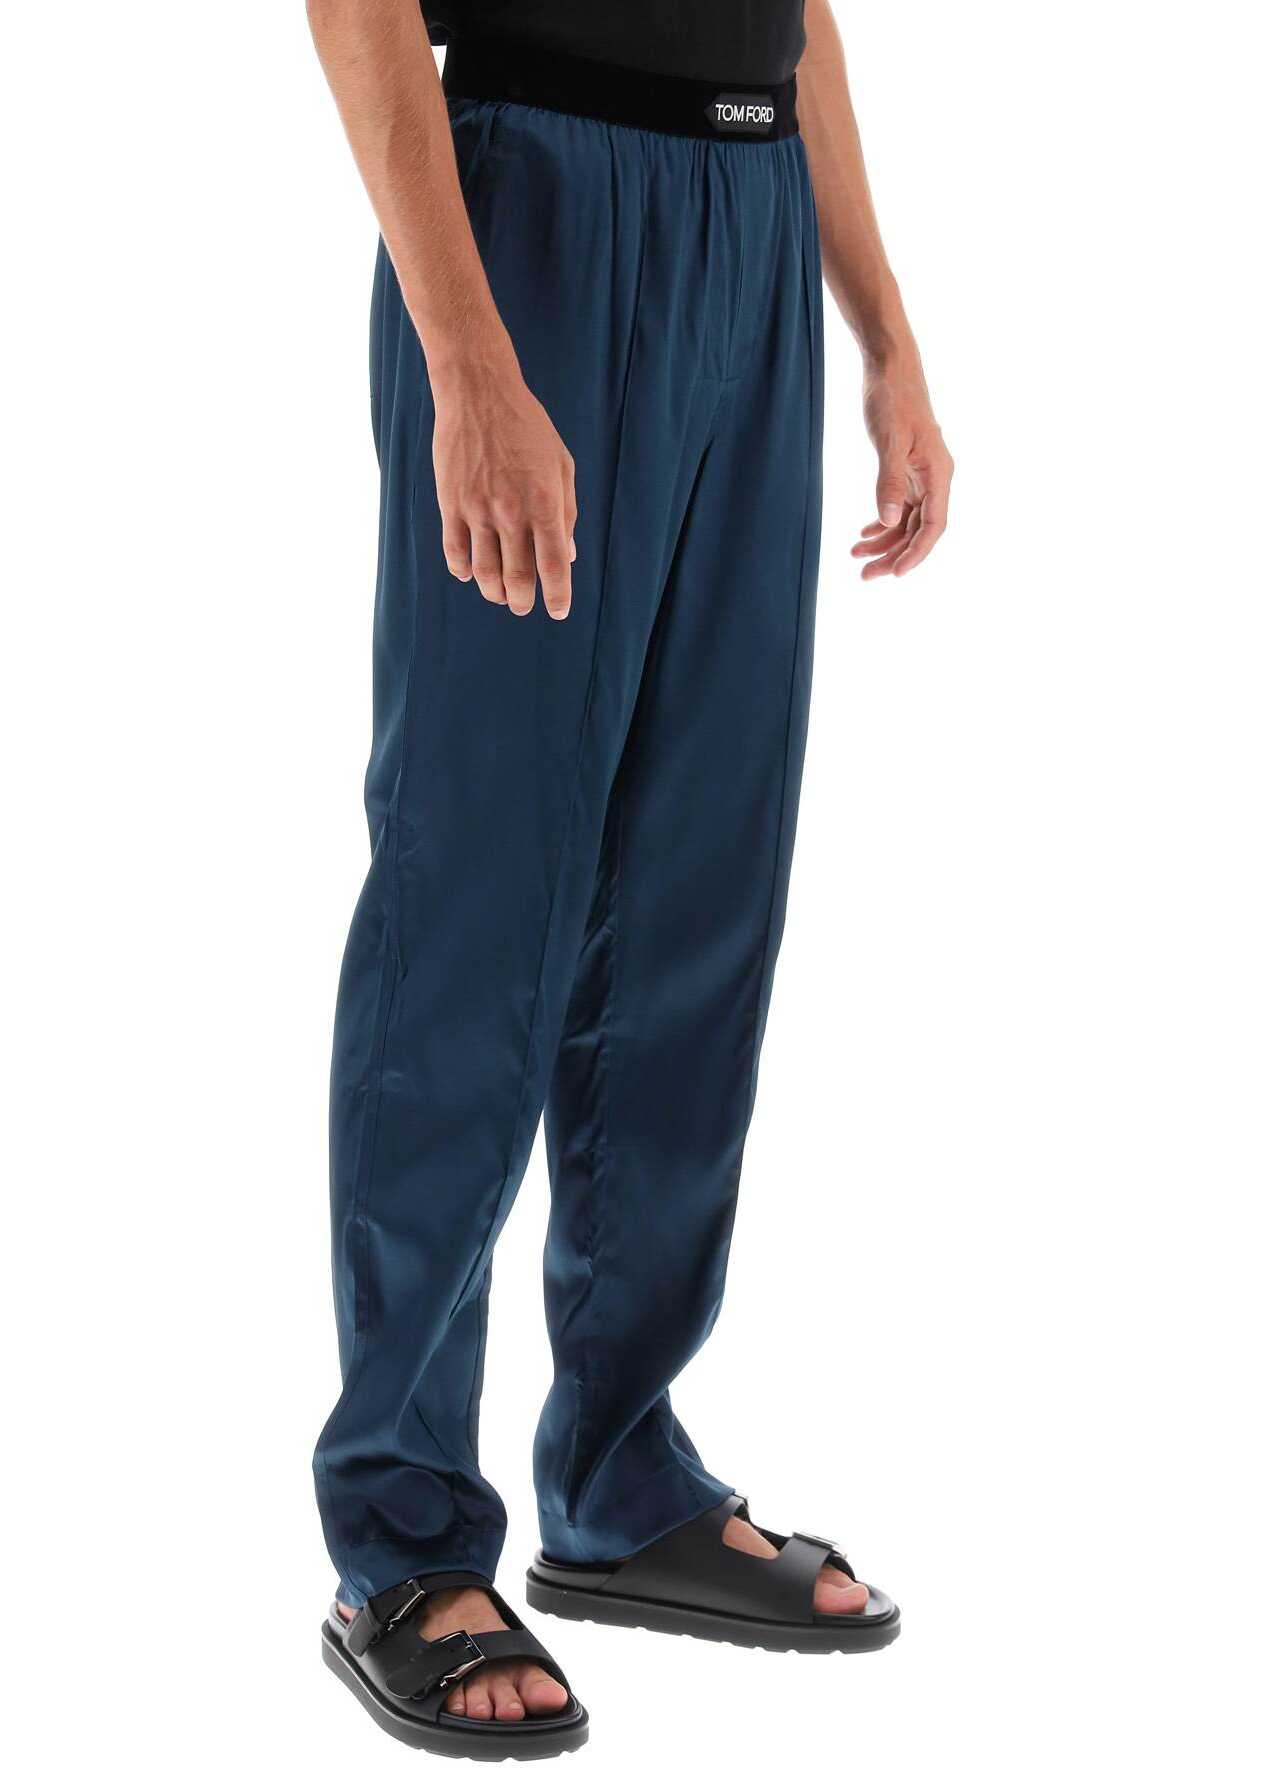 Tom Ford Silk Pajama Pants DEEP OCEAN